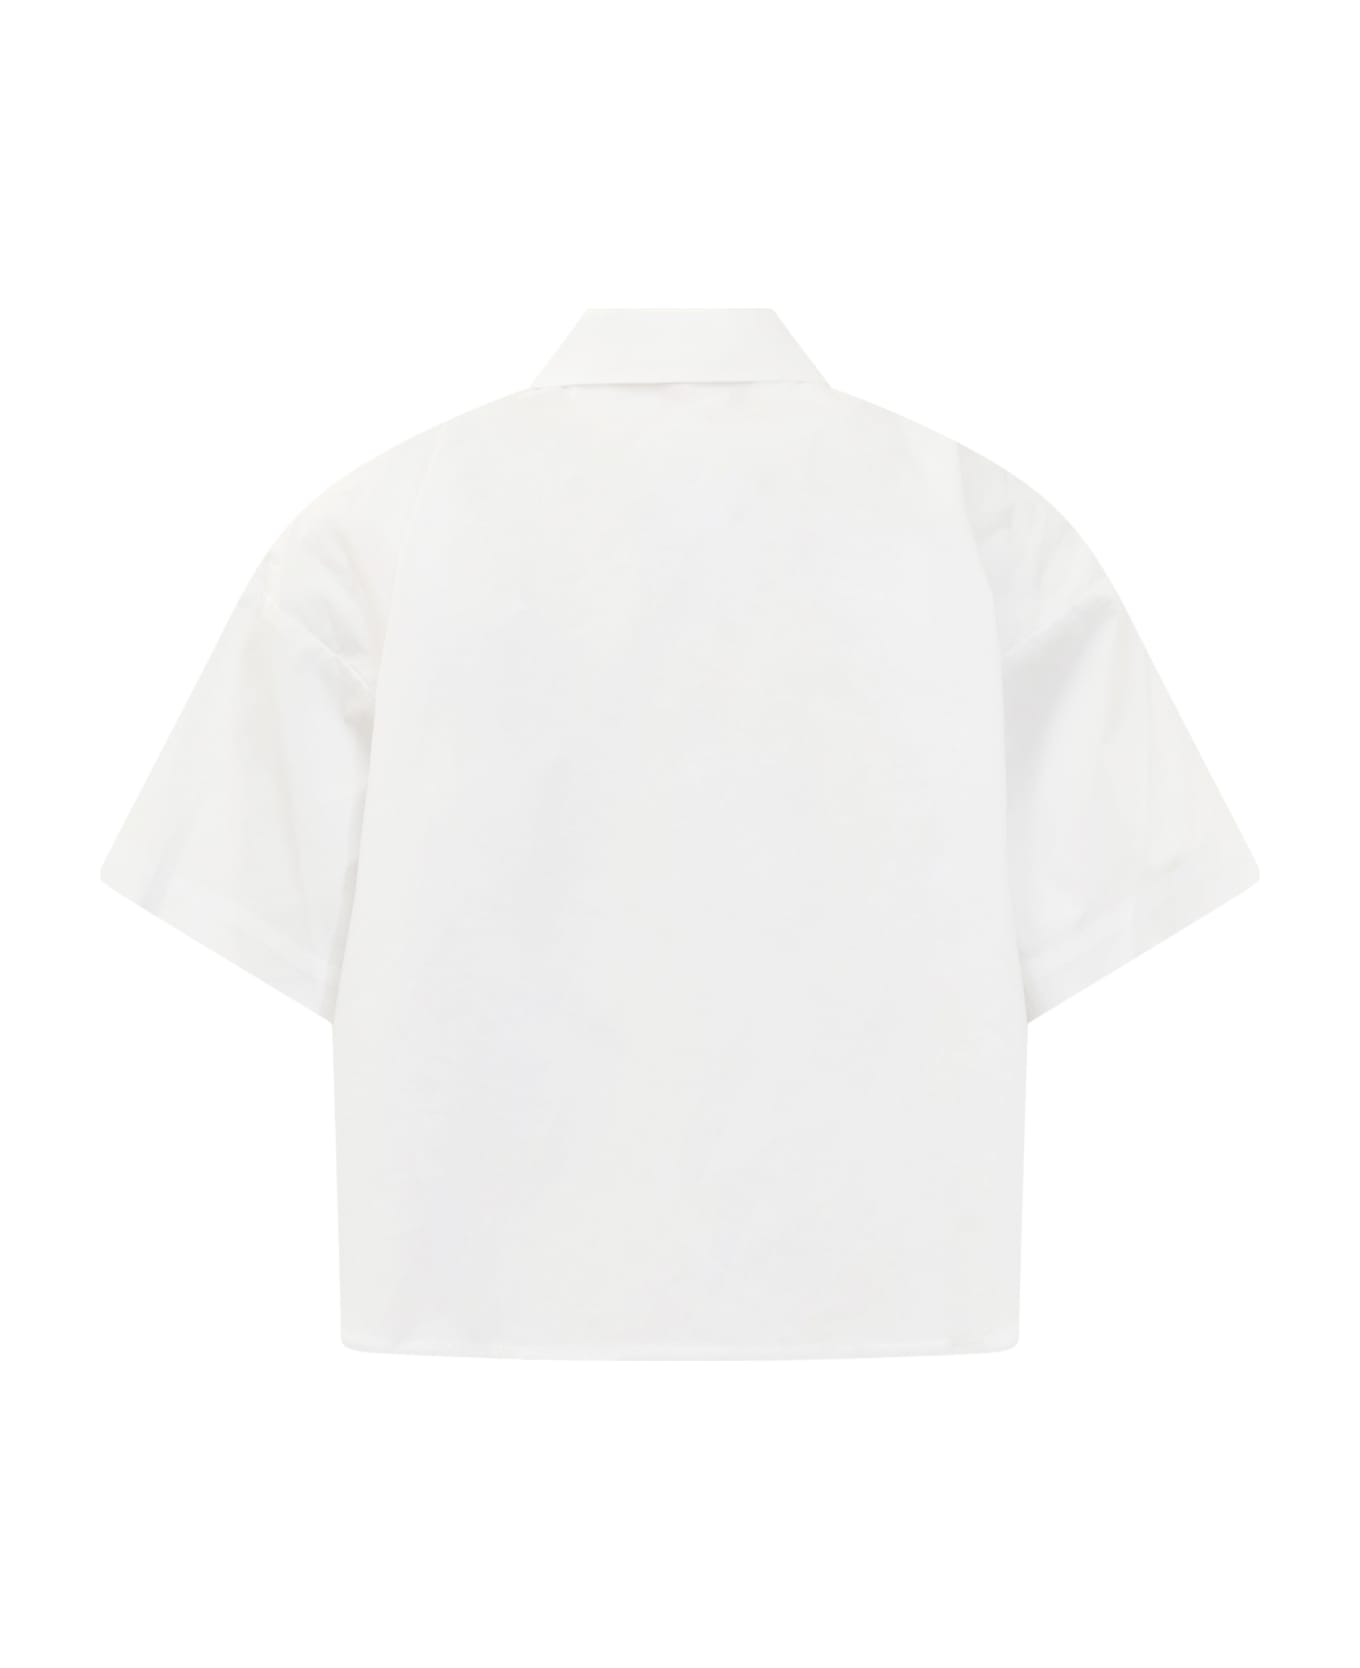 Michael Kors Collection Crop Shirt - White